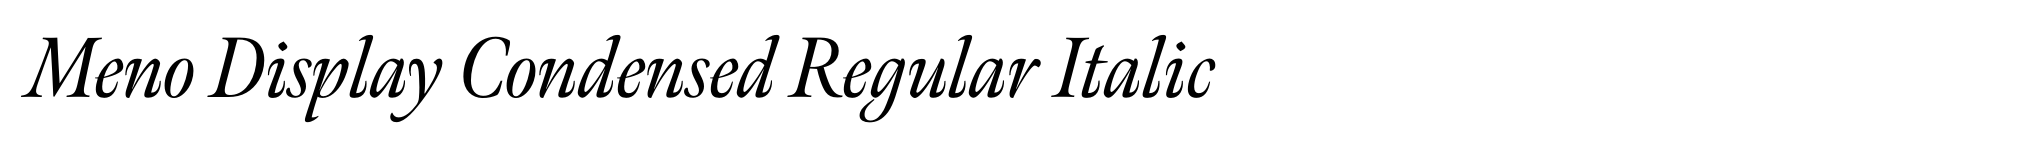 Meno Display Condensed Regular Italic image